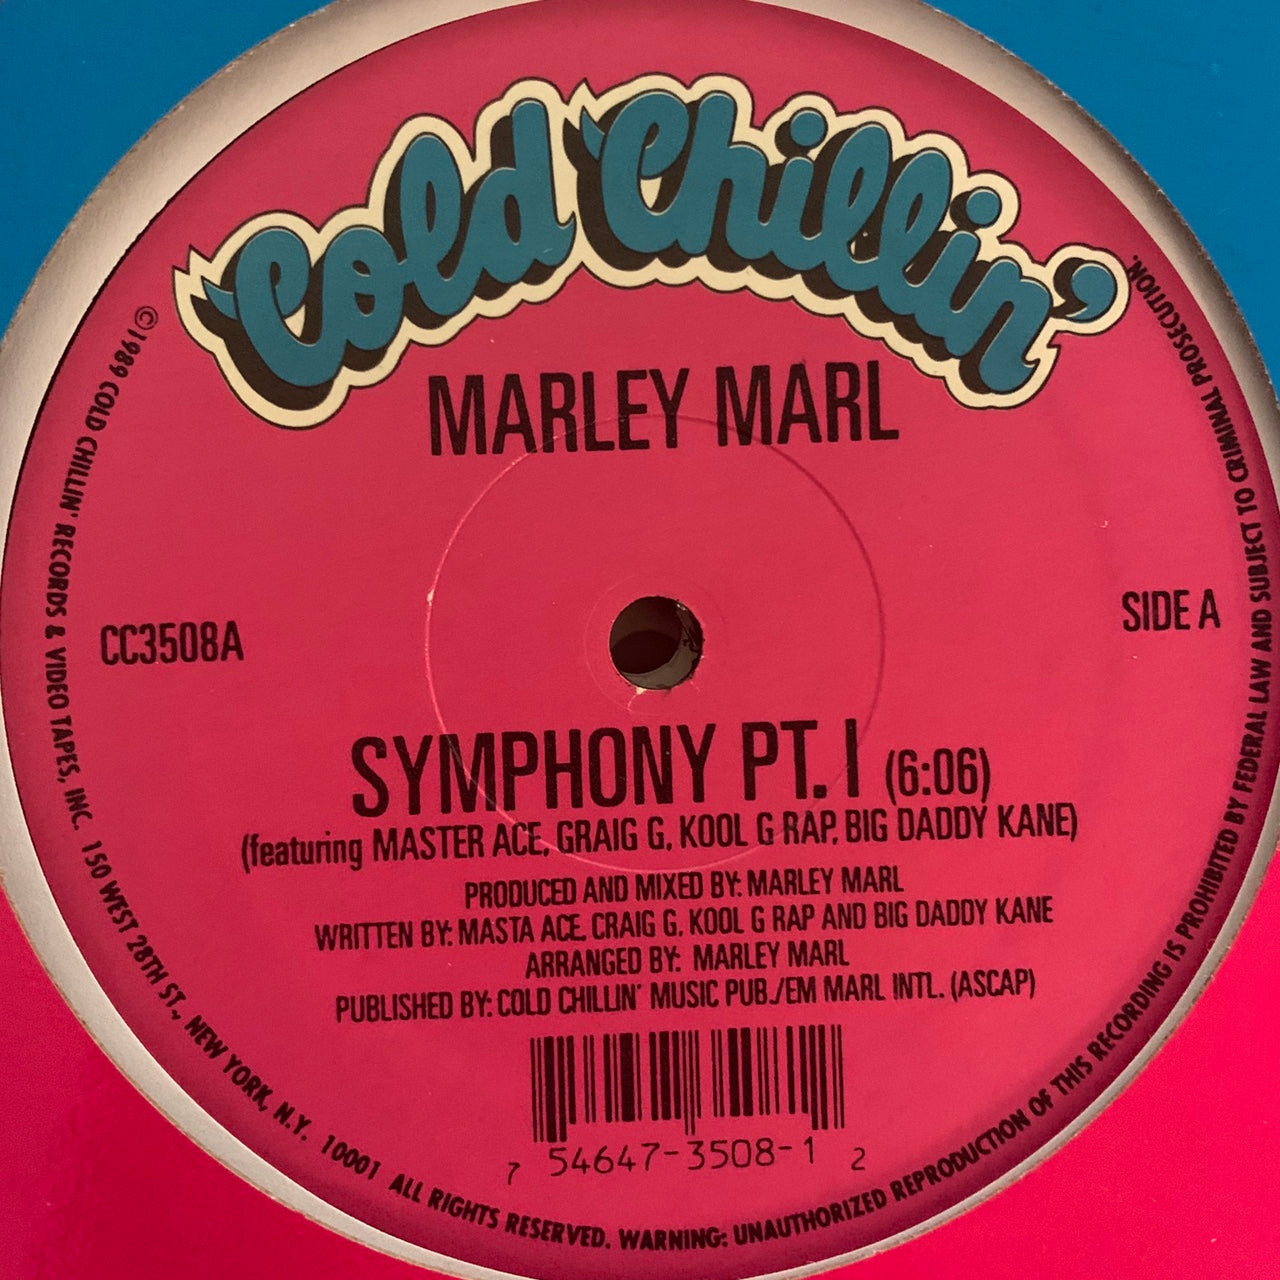 Marley Marl “Symphony PT 1” 2 Track 12inch Vinyl